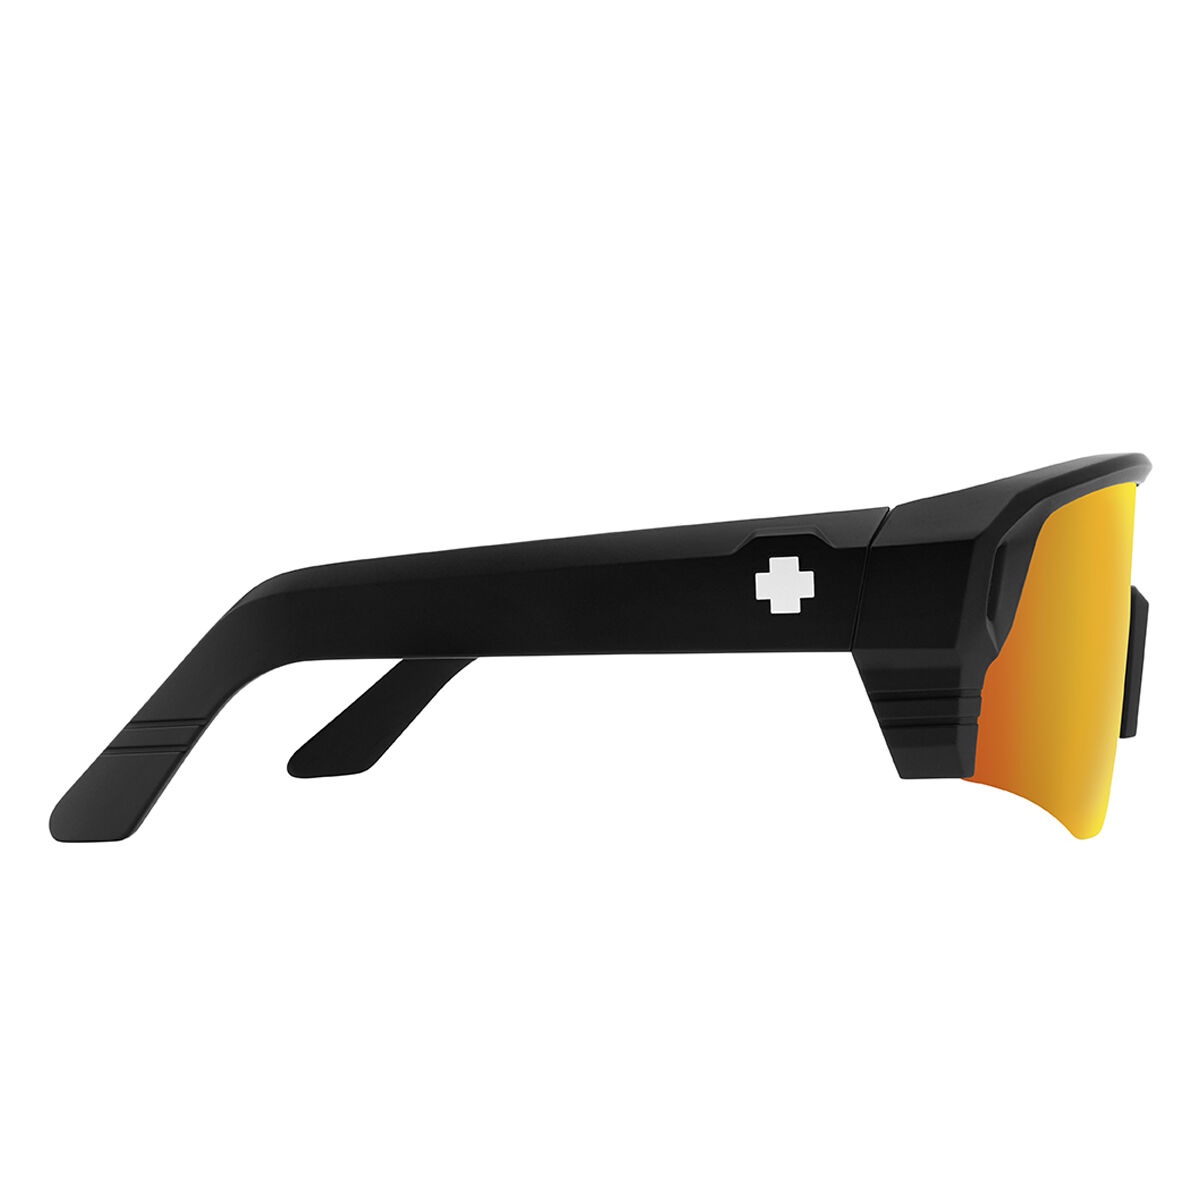 MONOLITH SPEED Sunglasses by Spy Optic